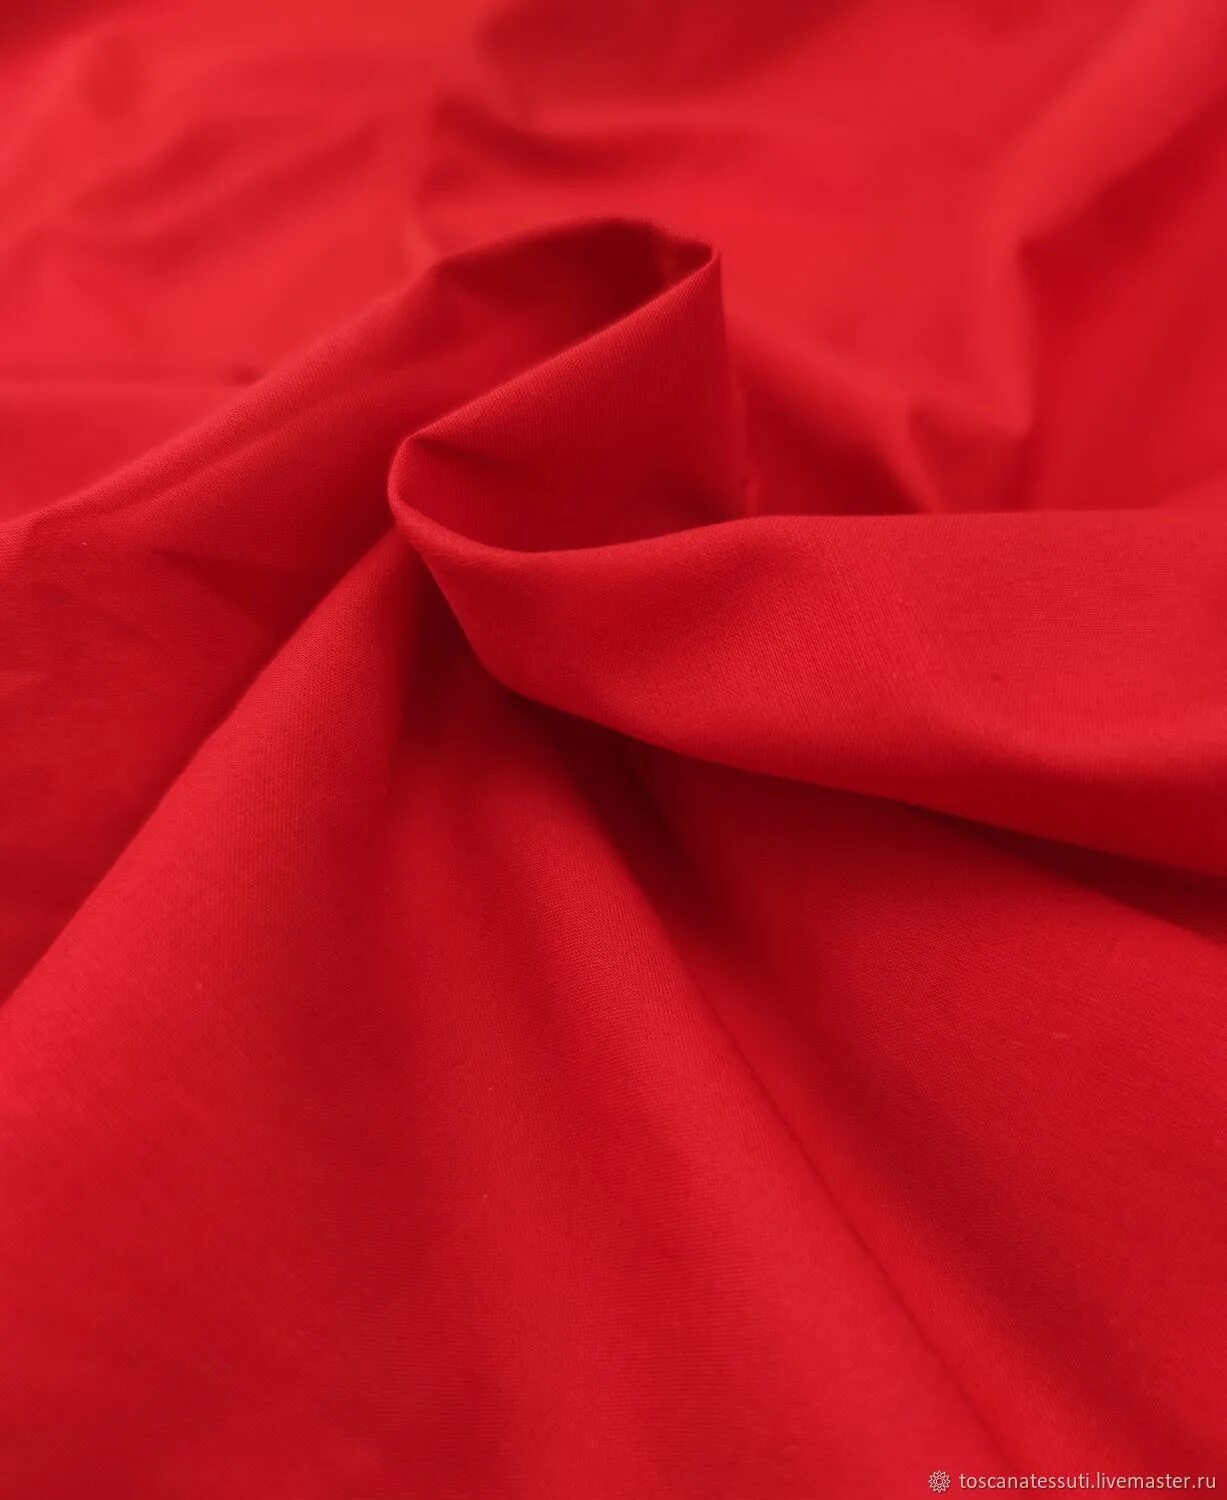 Verona 743 Bordo ткань. Красная ткань. Ткань красного цвета. Мягкая красная ткань. Хлопок красный купить